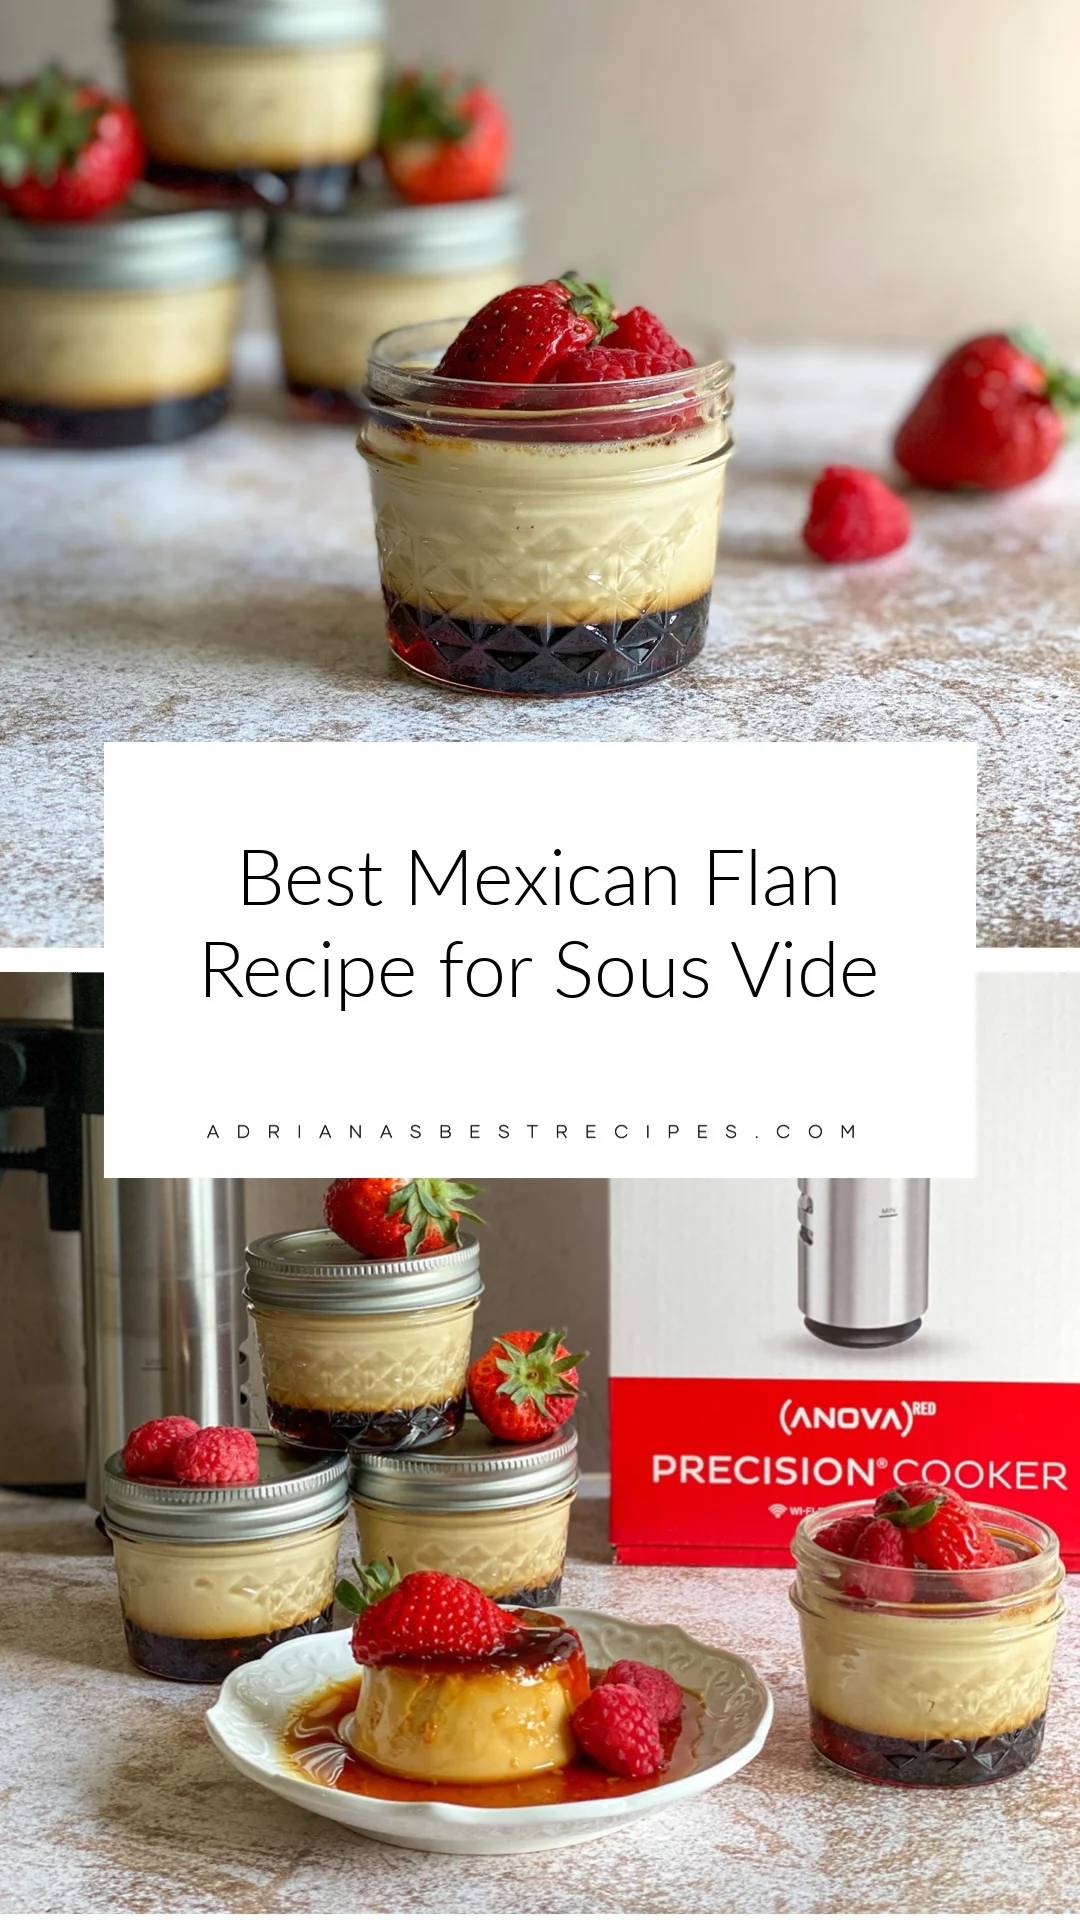 https://www.adrianasbestrecipes.com/wp-content/uploads/2021/10/Best-Mexican-Flan-Recipe-for-Sous-Vide.jpeg.webp